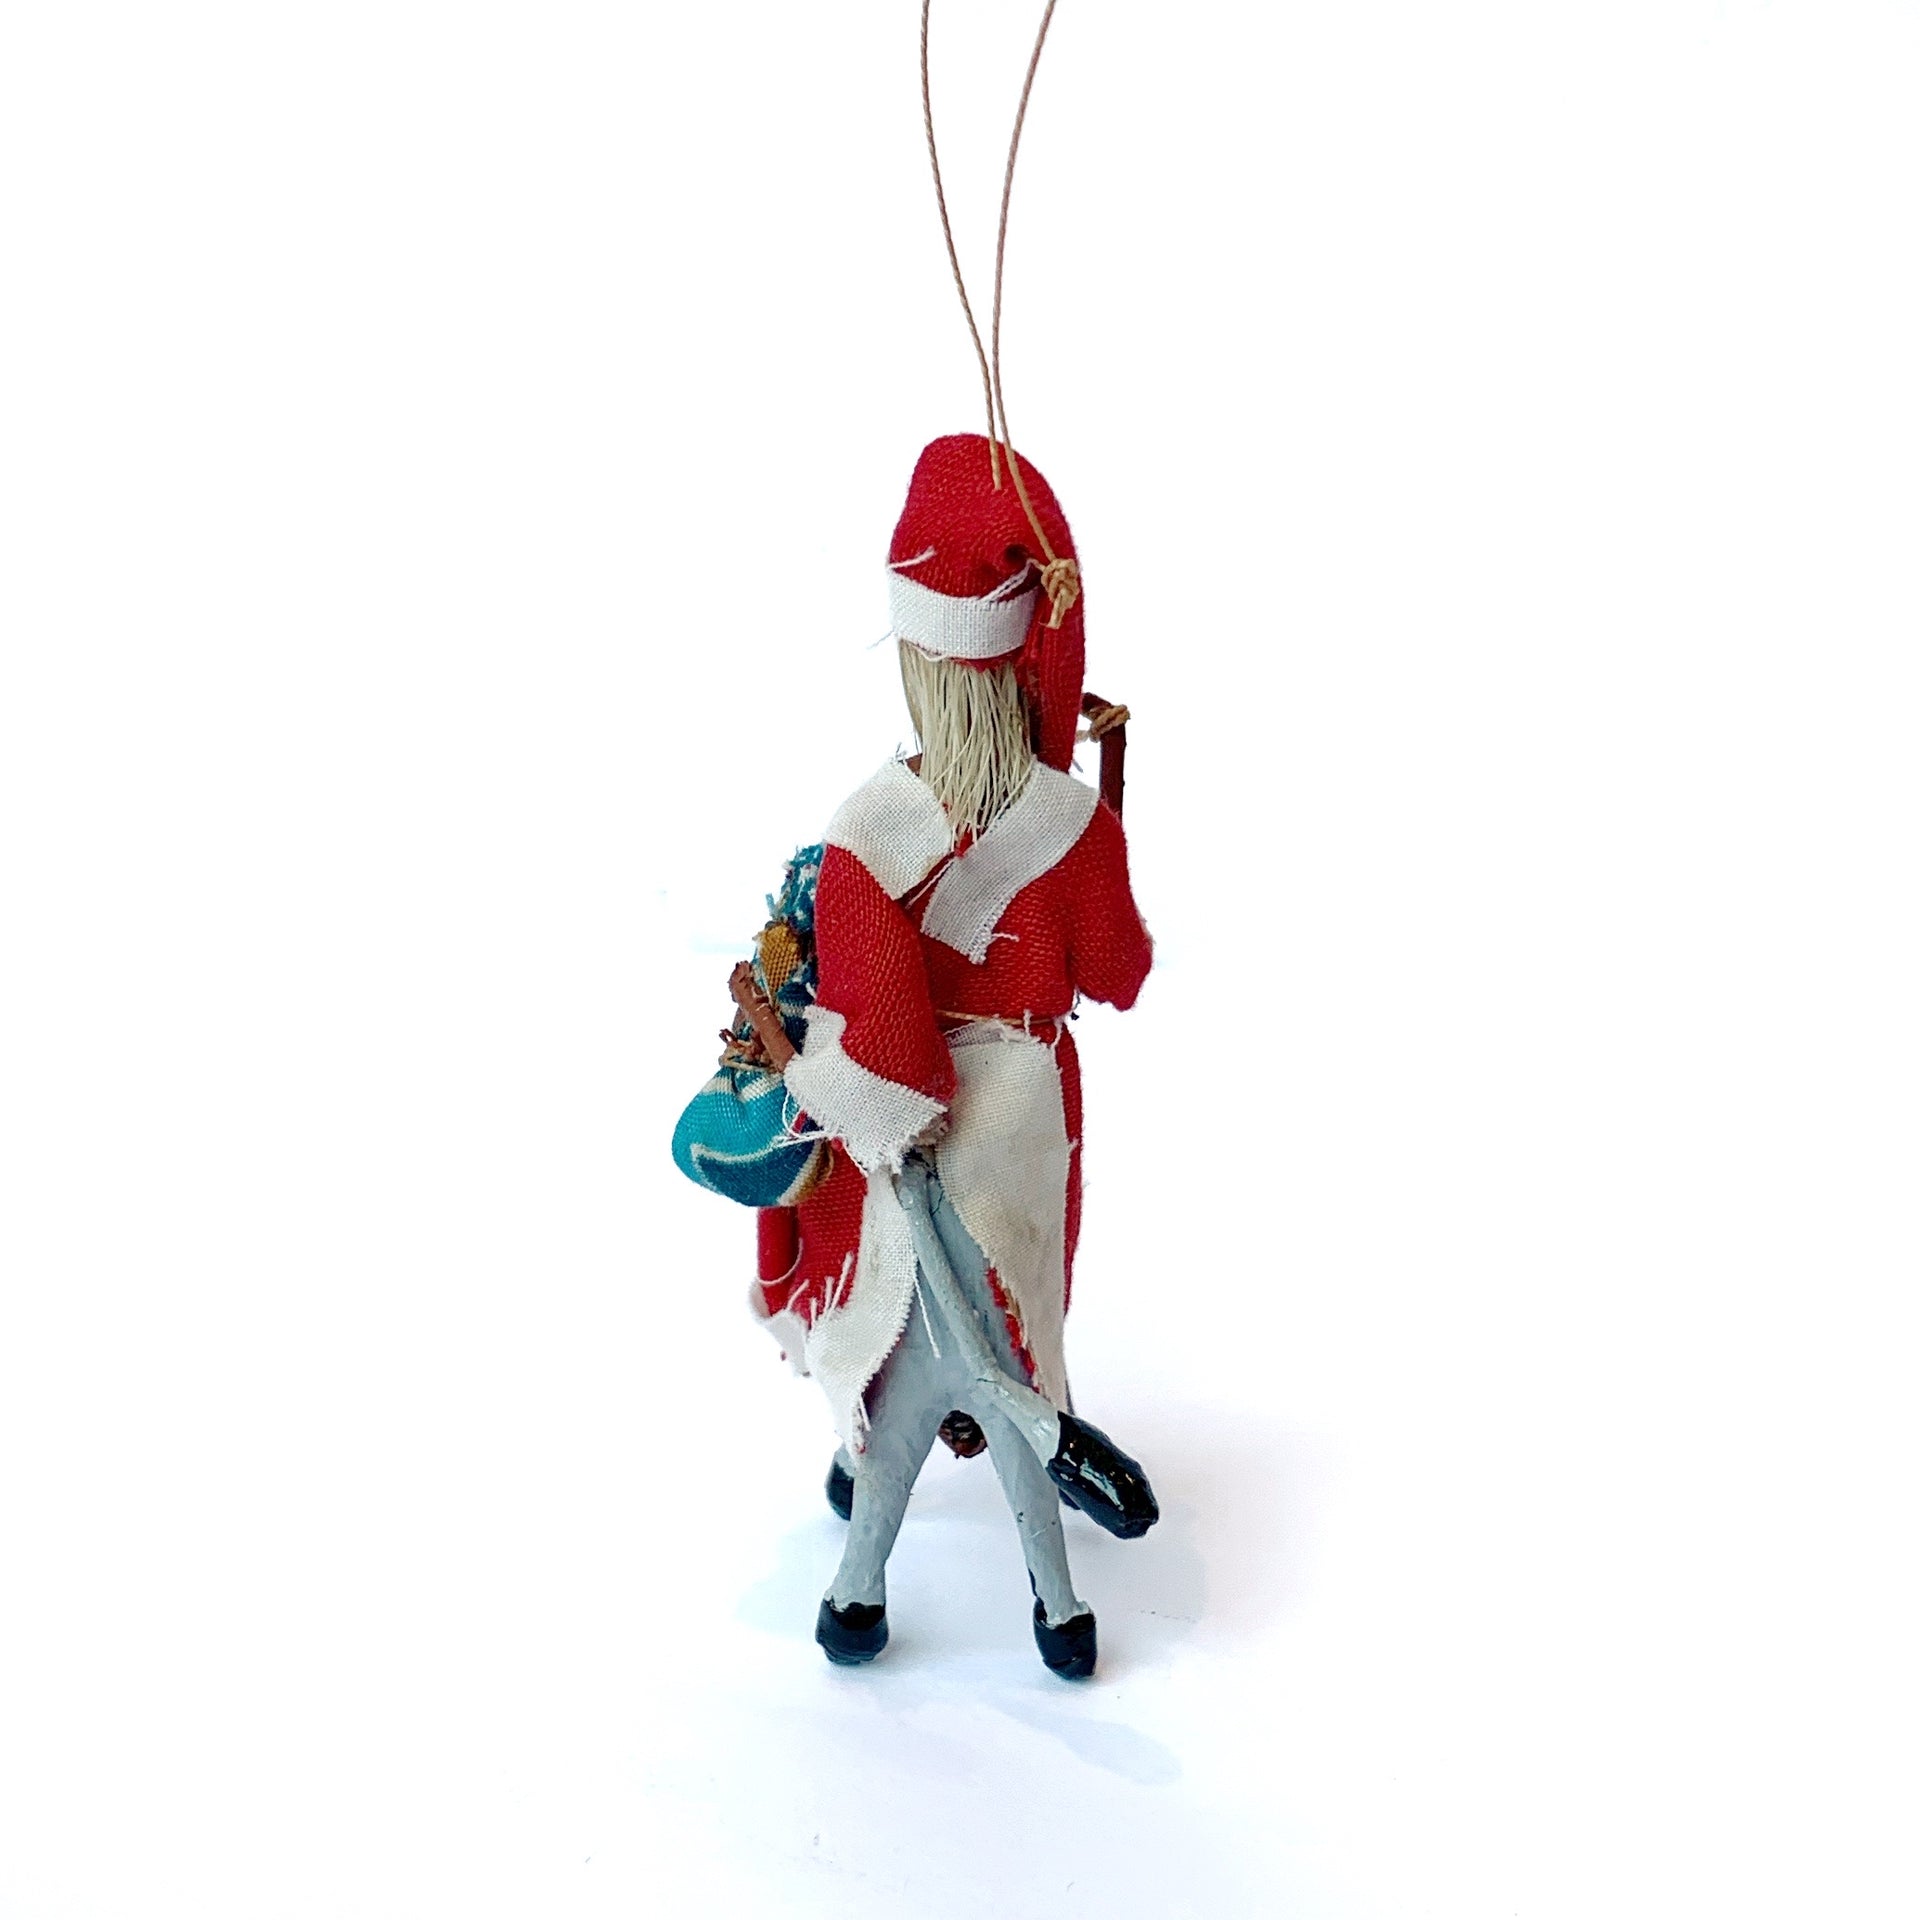 Santa Riding a Donkey Ornament